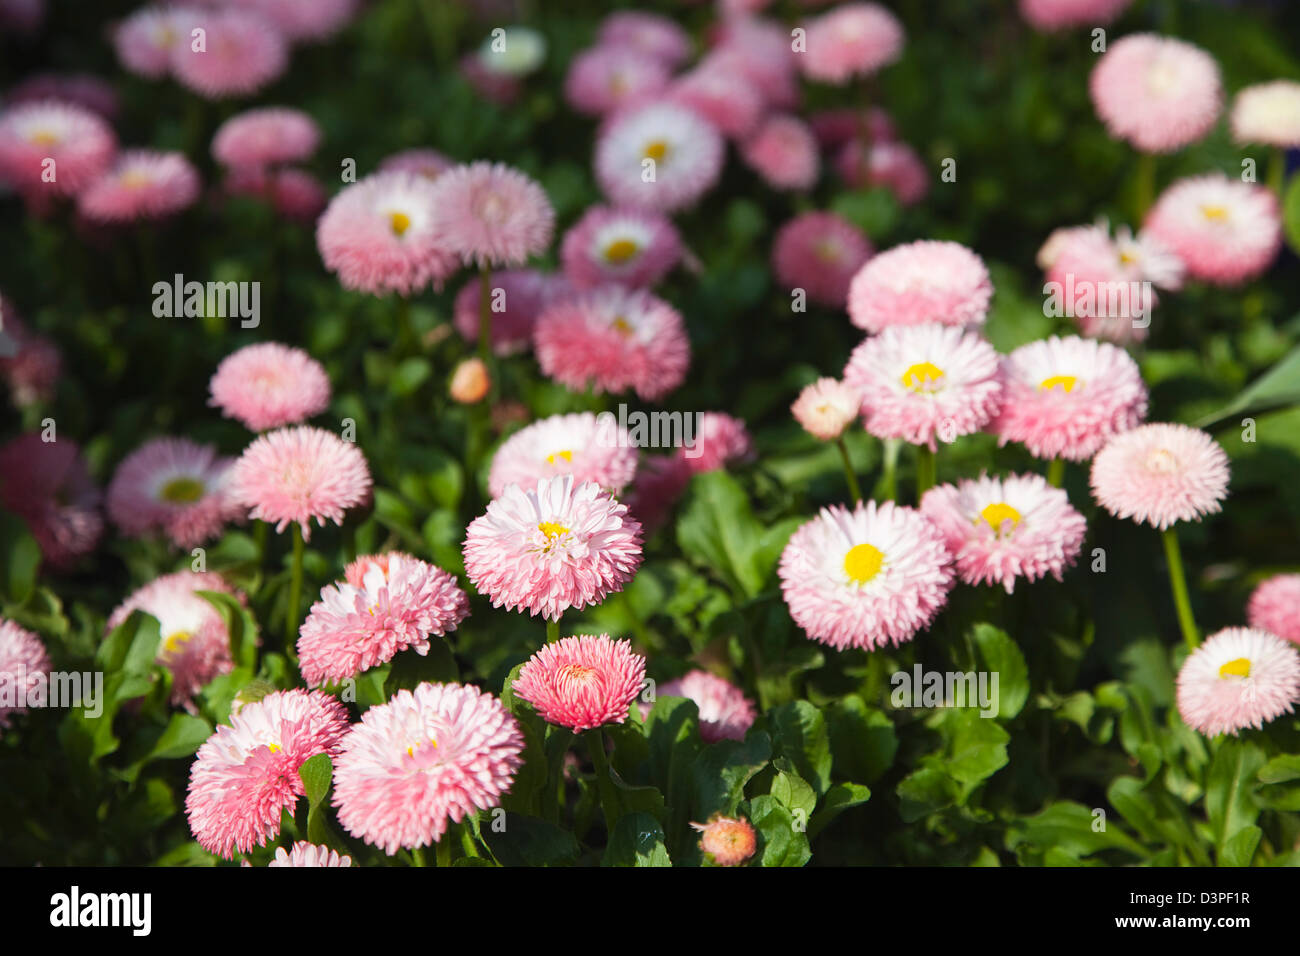 Mass of pink Bellis Perennis daisies growing wild. Stock Photo